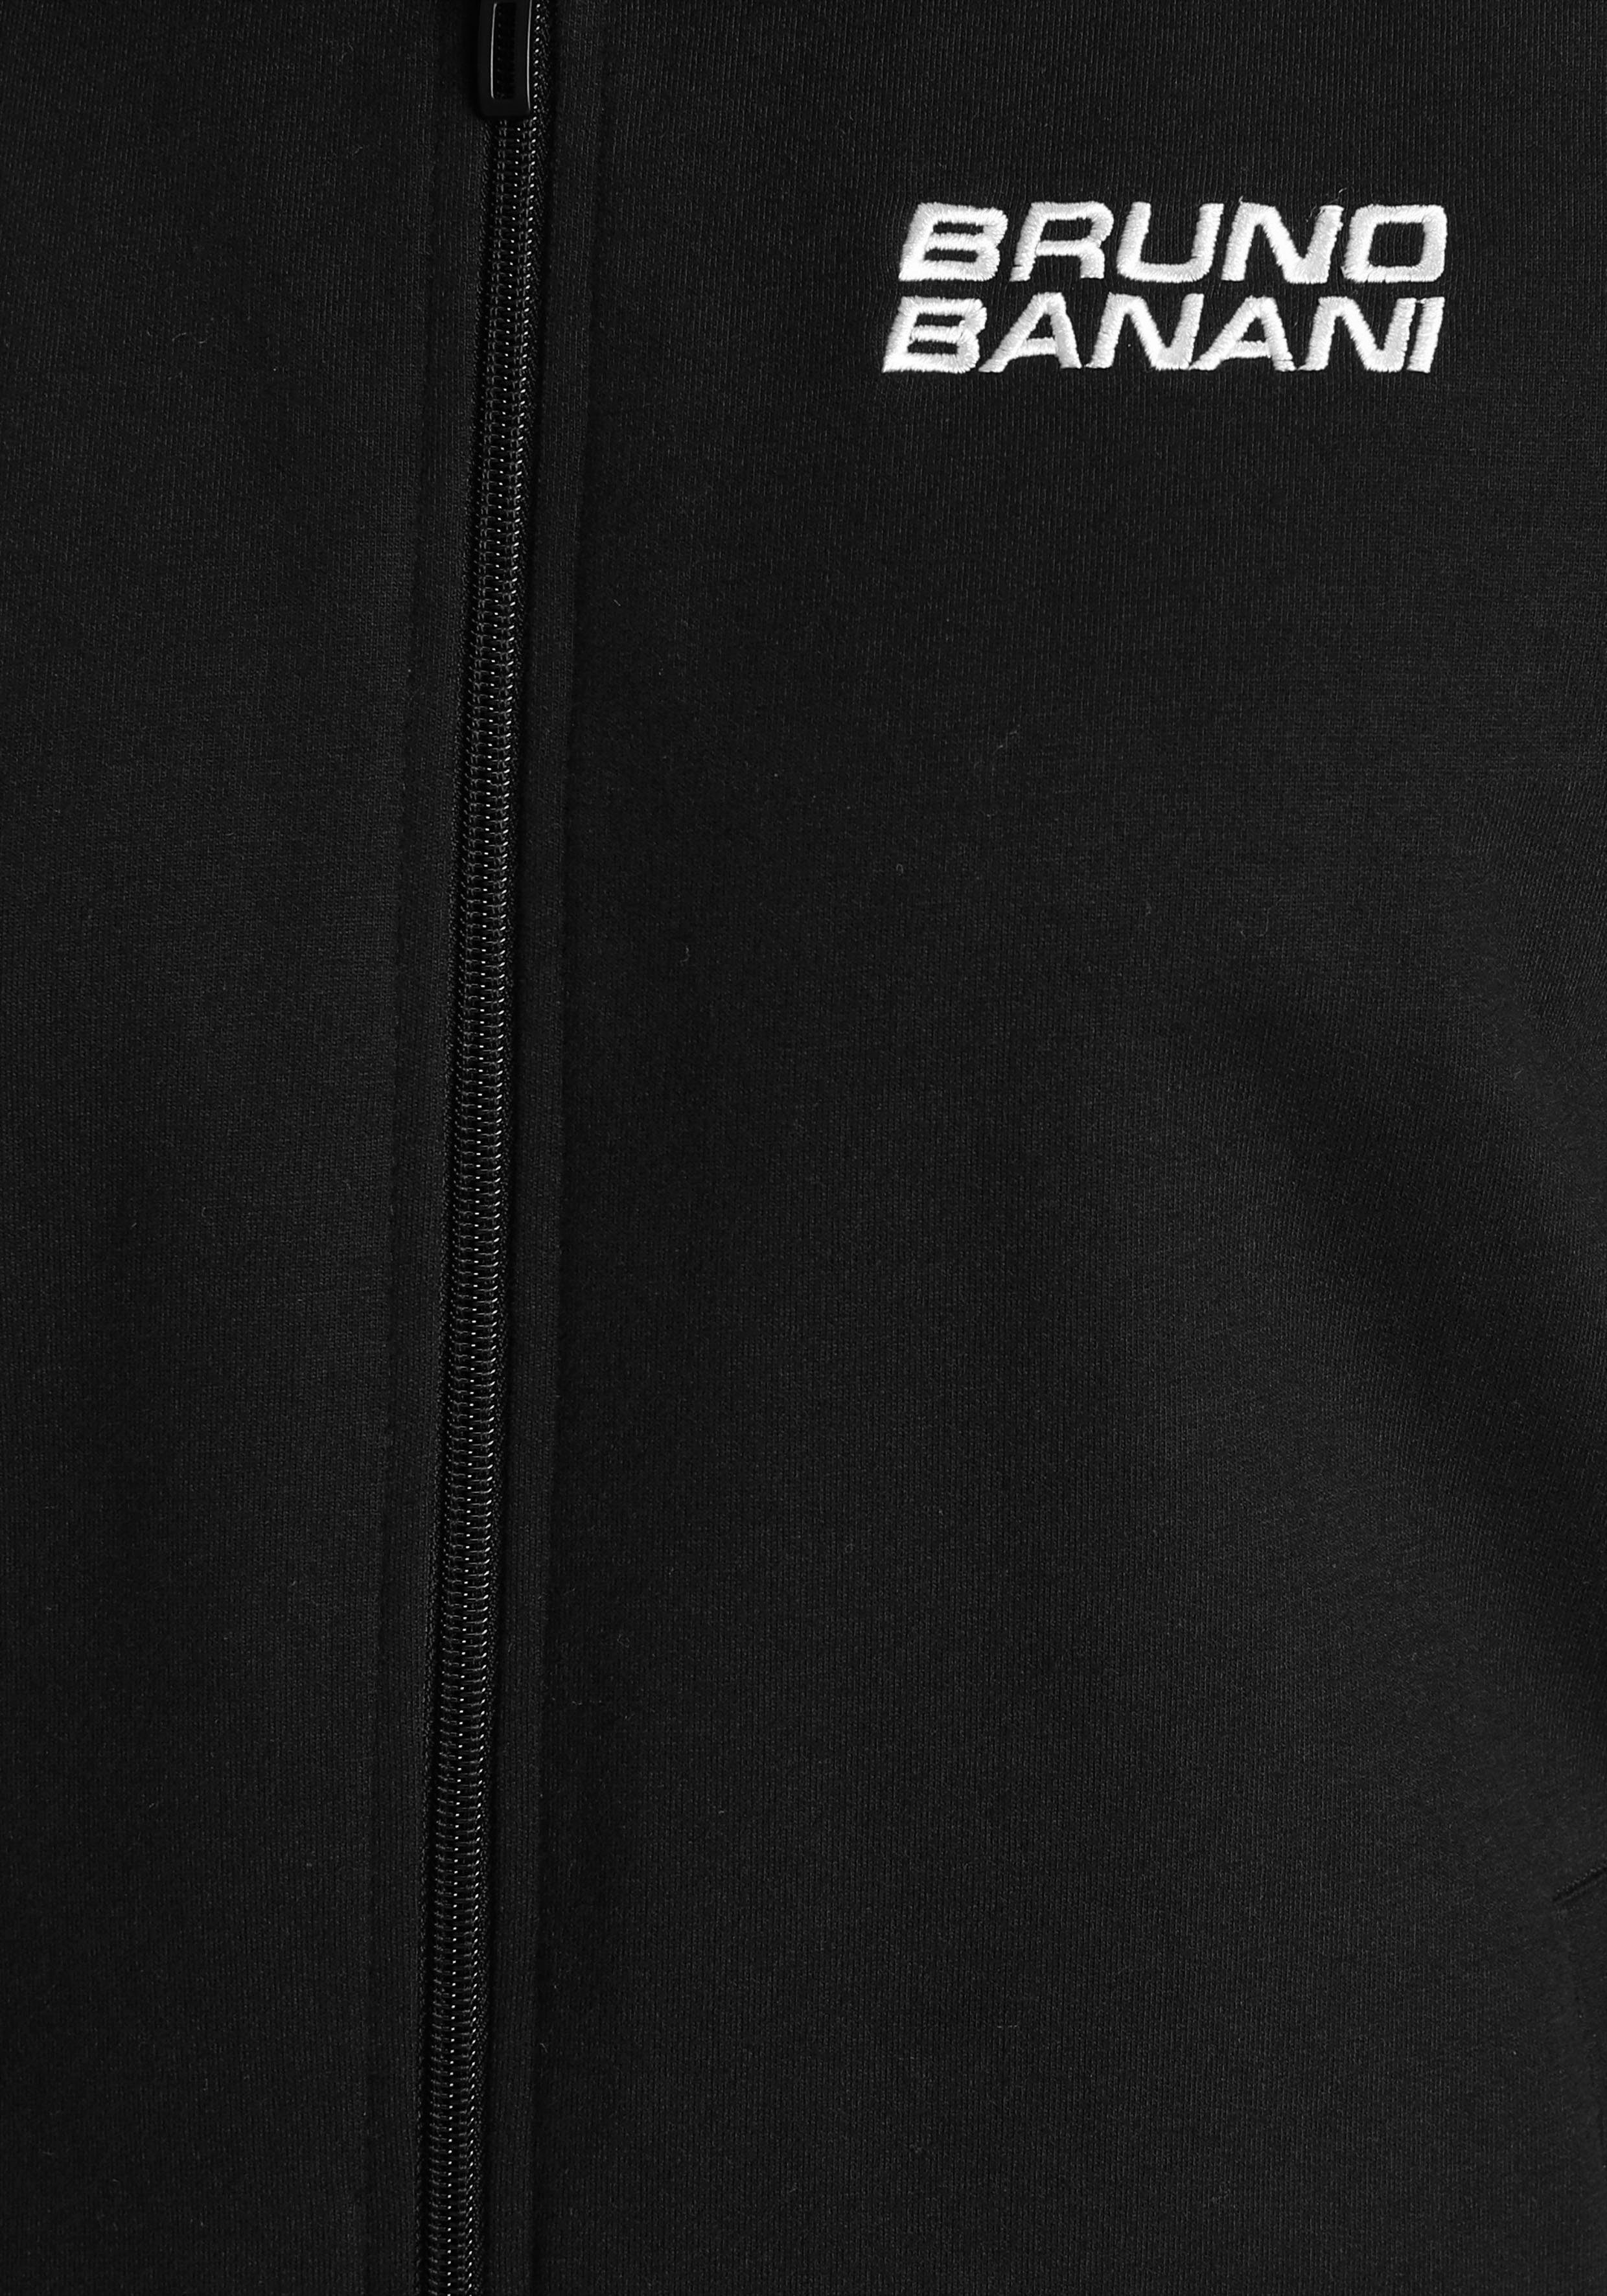 Jogginganzug Comfort Fit, Banani schwarz-grau mit Logo Stickerei Bruno